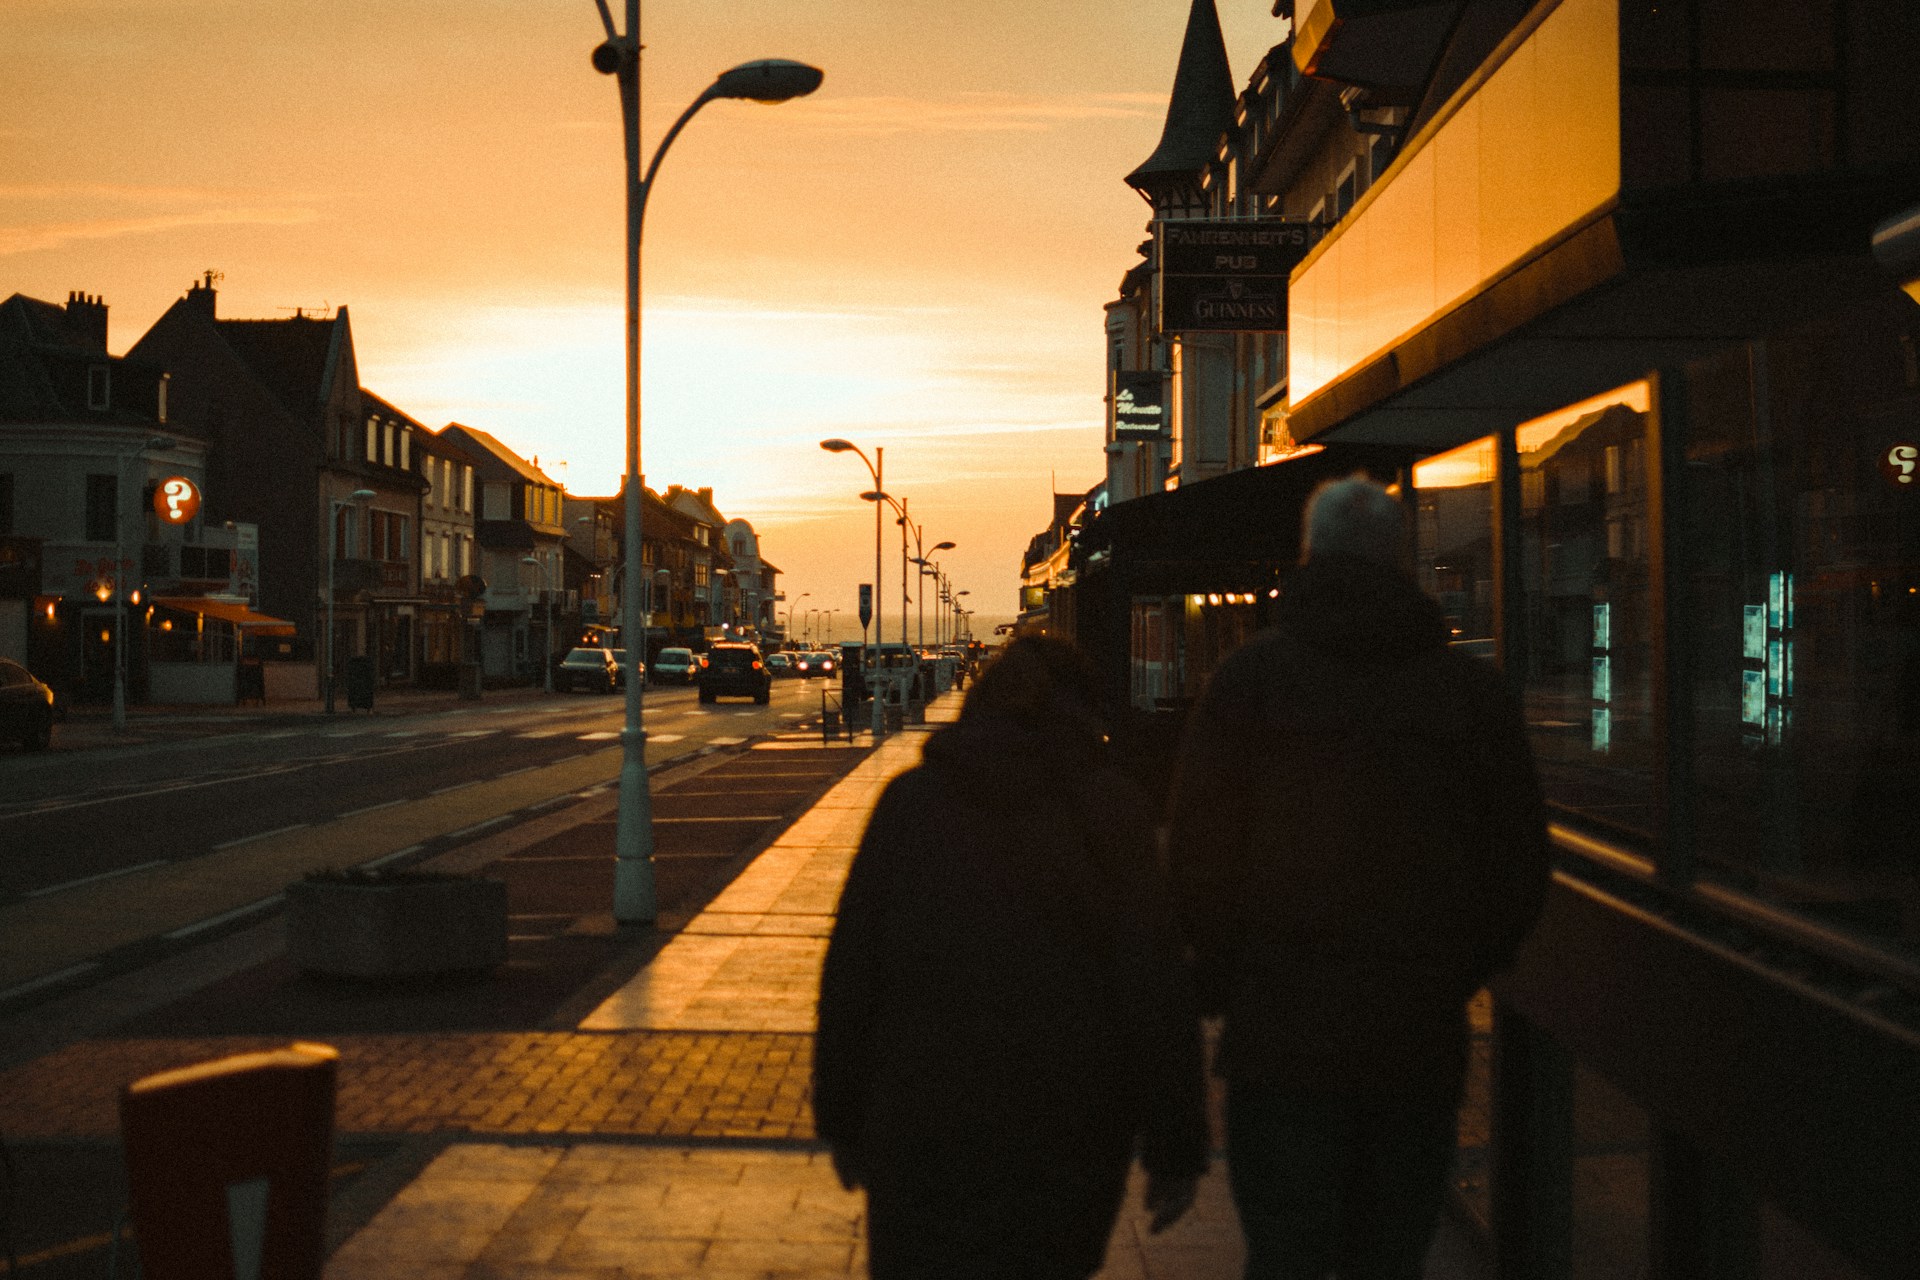 An elderly couple in winter coats walks down a wide sidewalk next to a calm roadway beside shops and a church